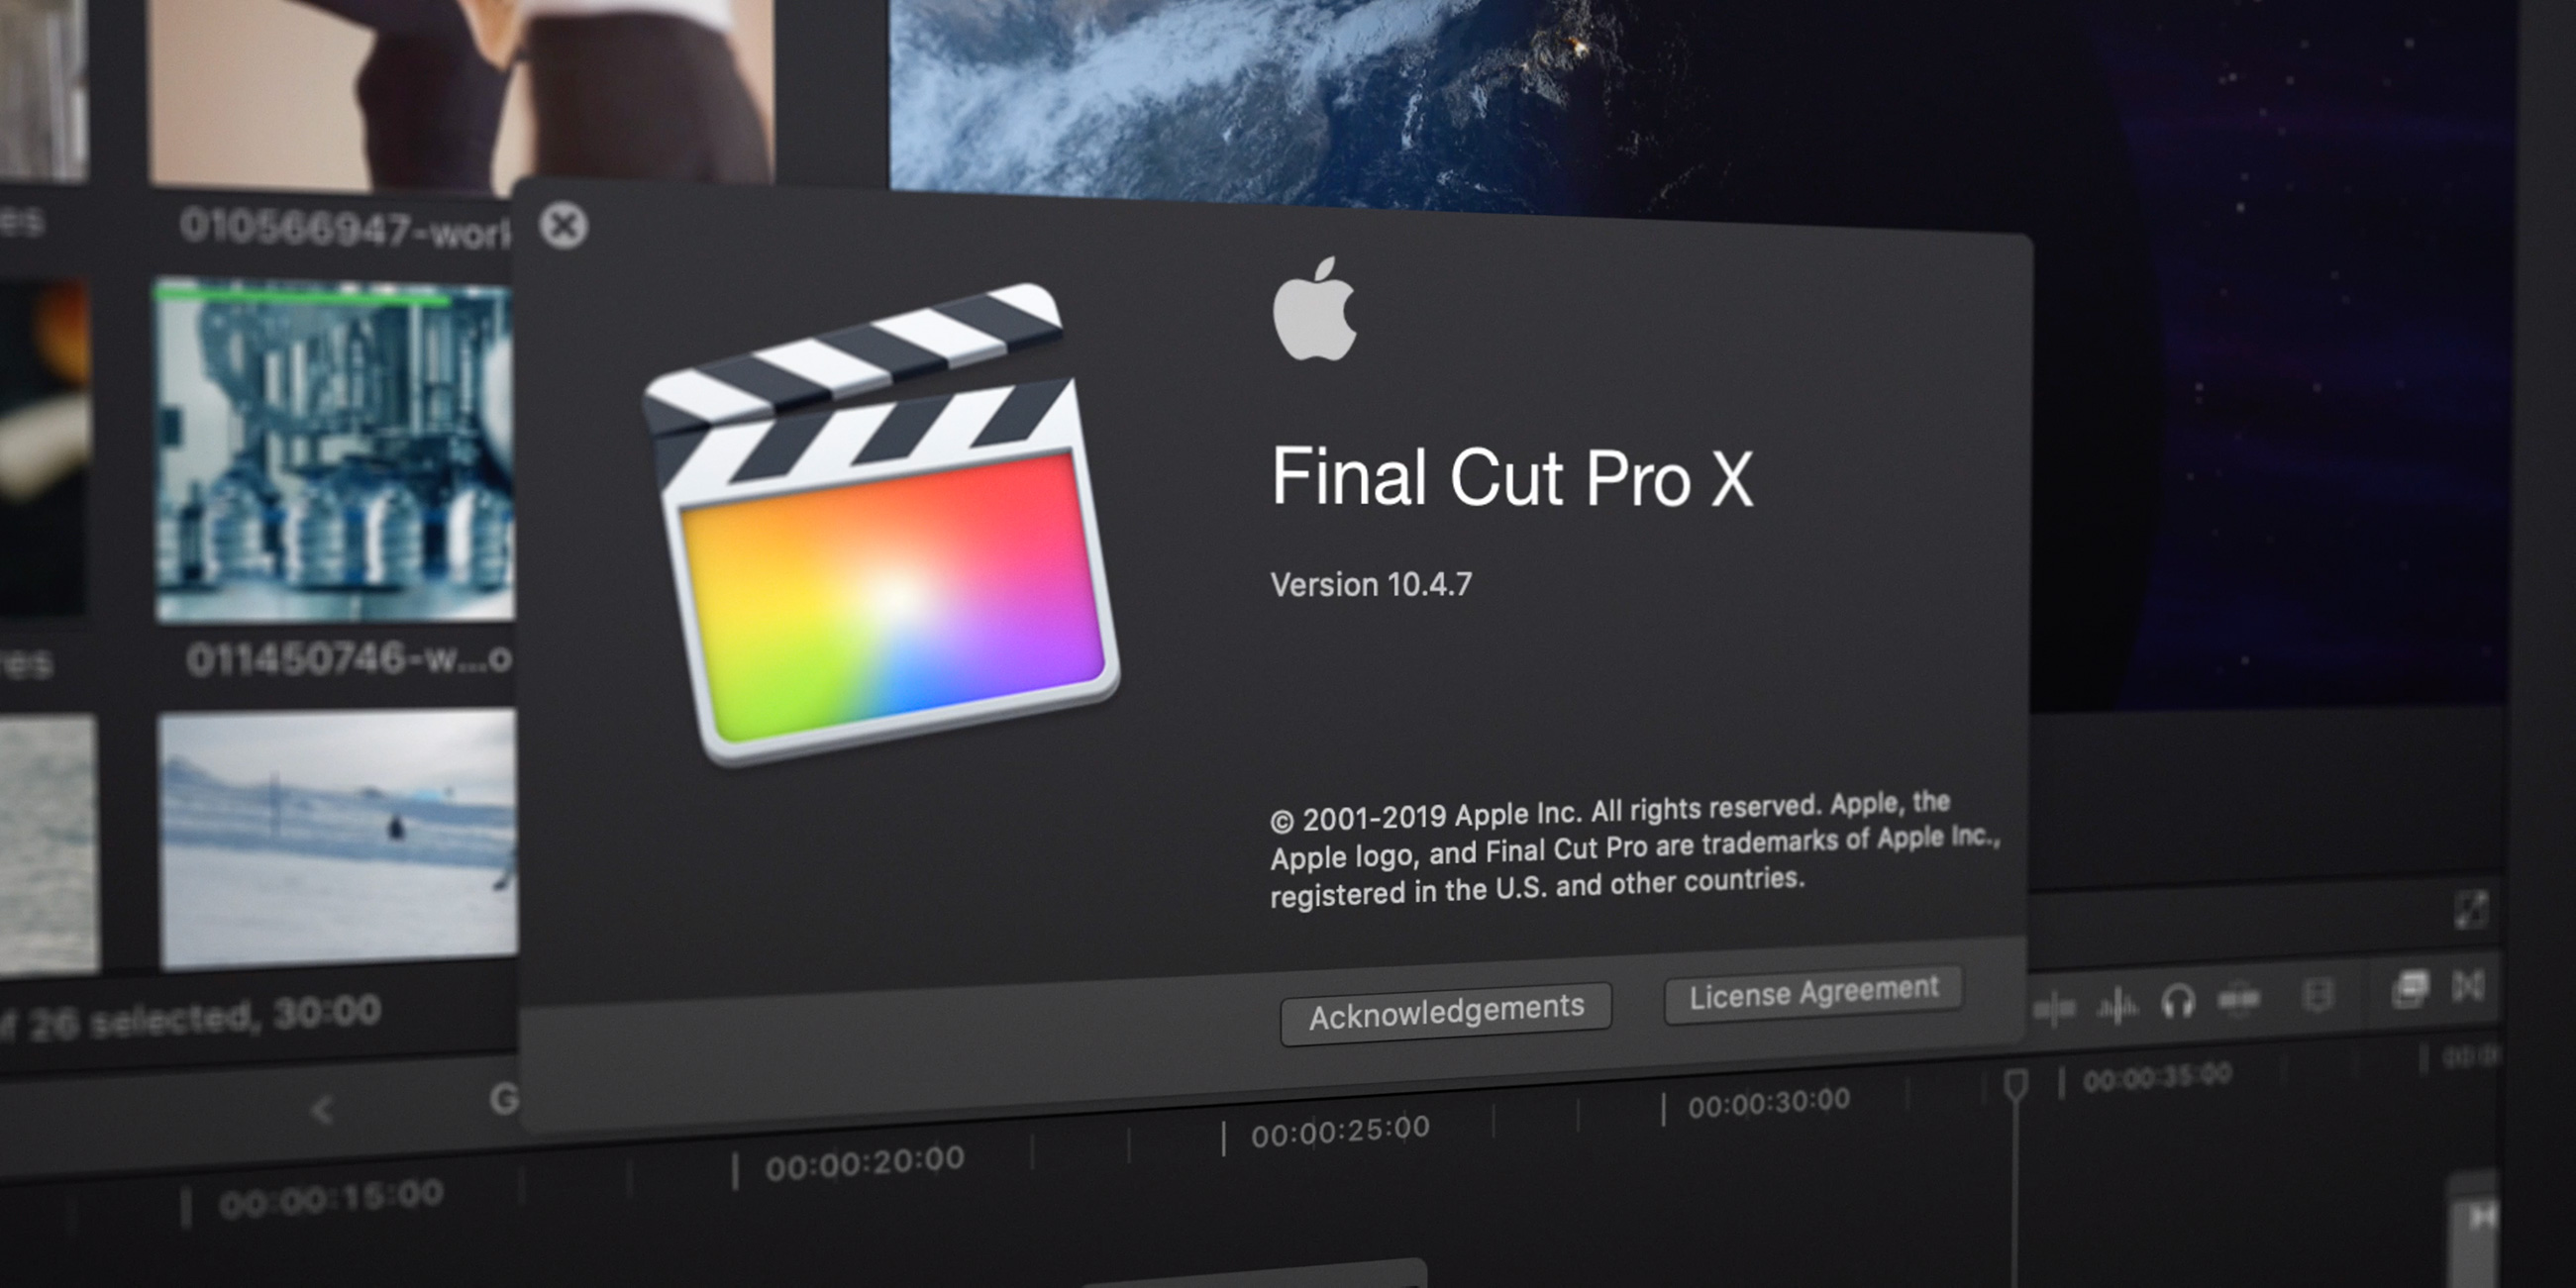 A Quick Look at Final Cut Pro version 10.4.7